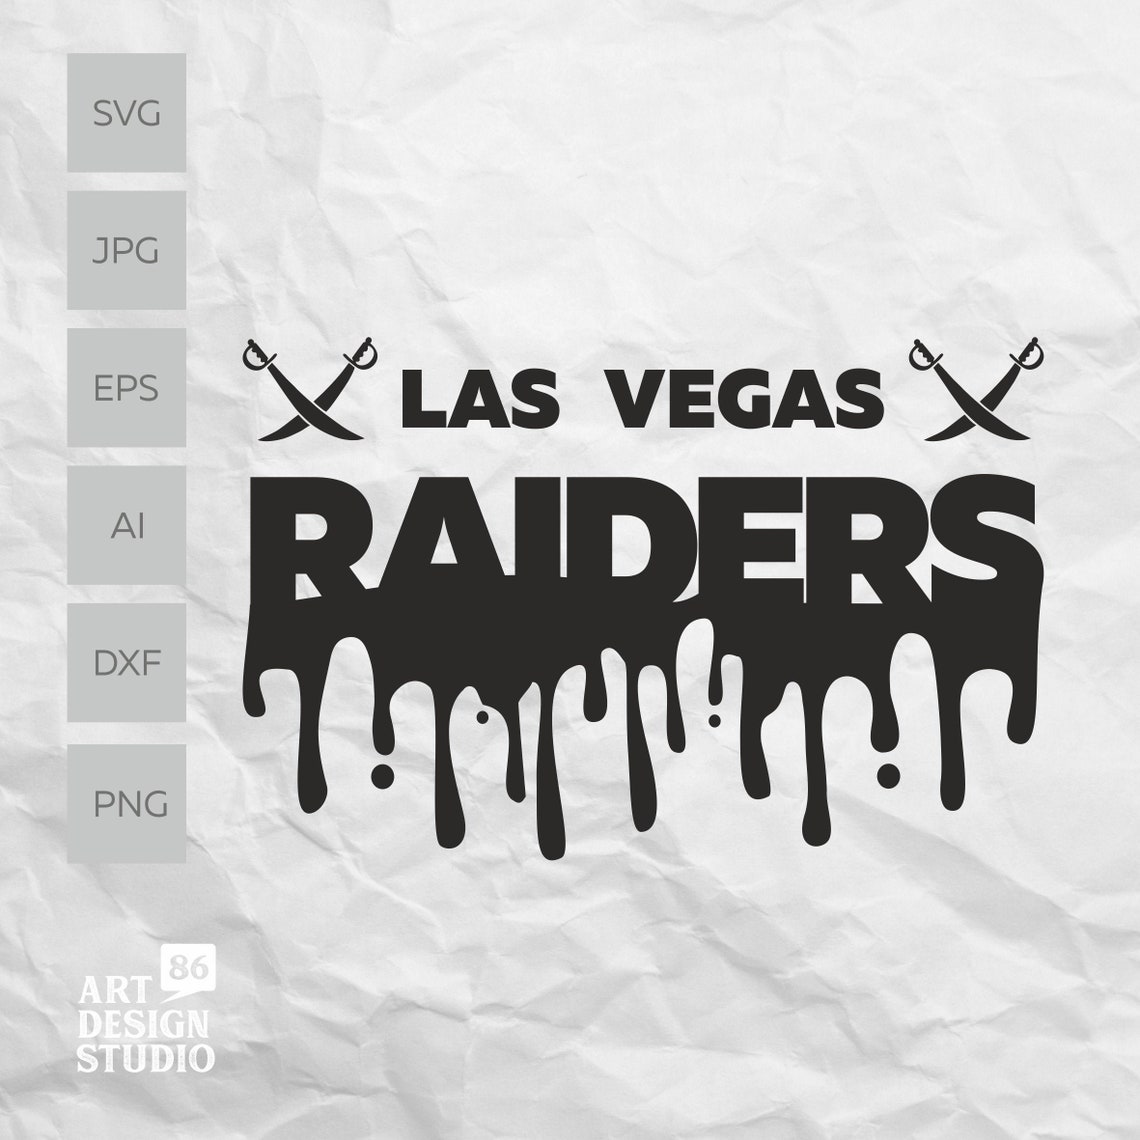 Las Vegas Raiders Svg Cut File For Silhouette Cameo Cricut Etsy